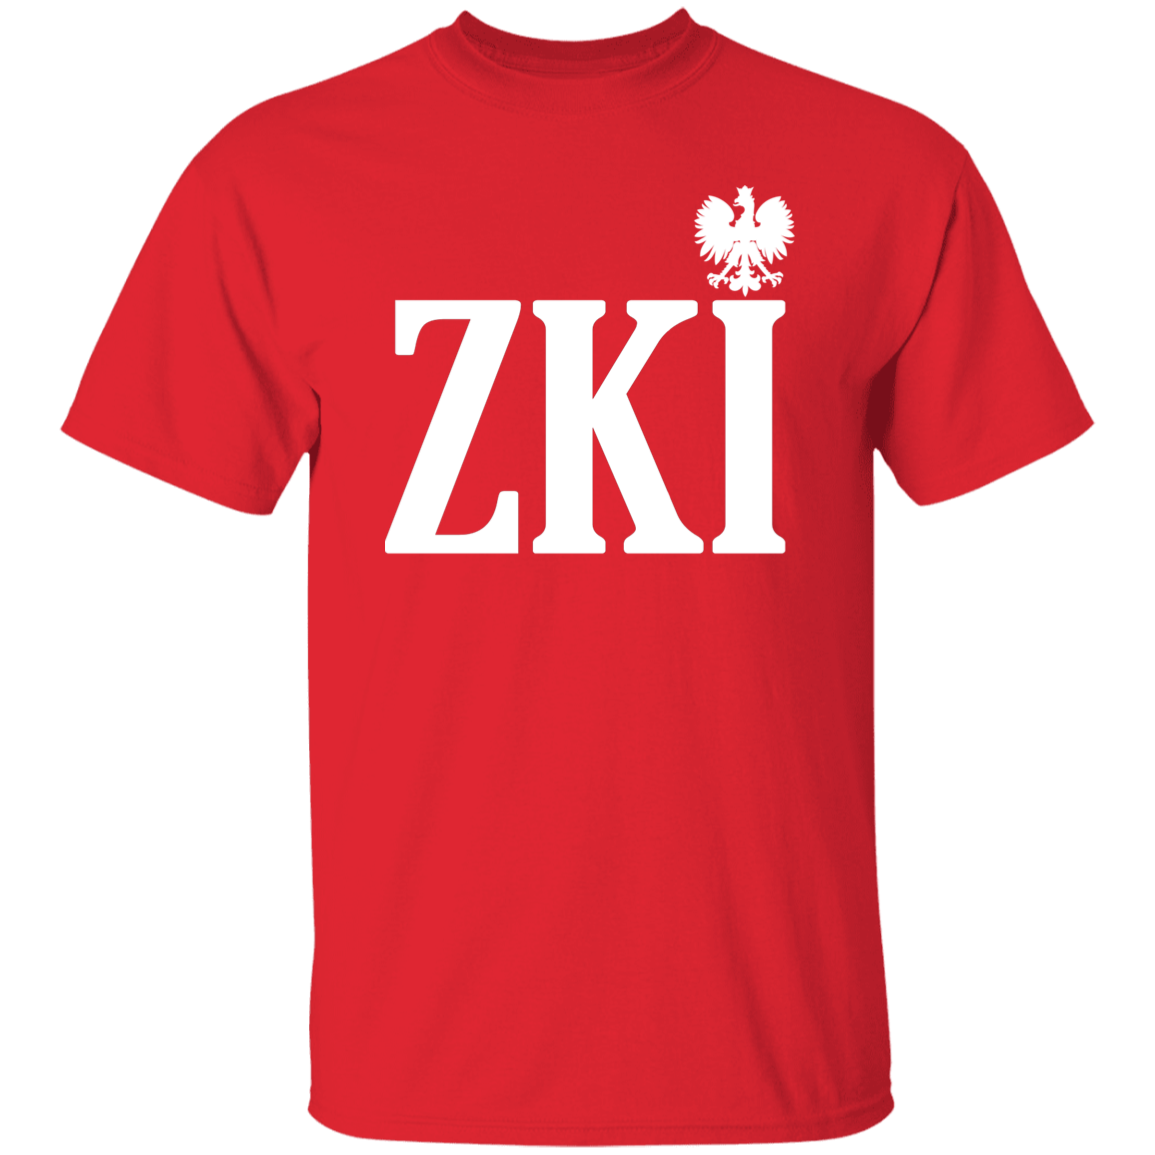 ZKI Polish Surname Ending Apparel CustomCat G500 5.3 oz. T-Shirt Red S